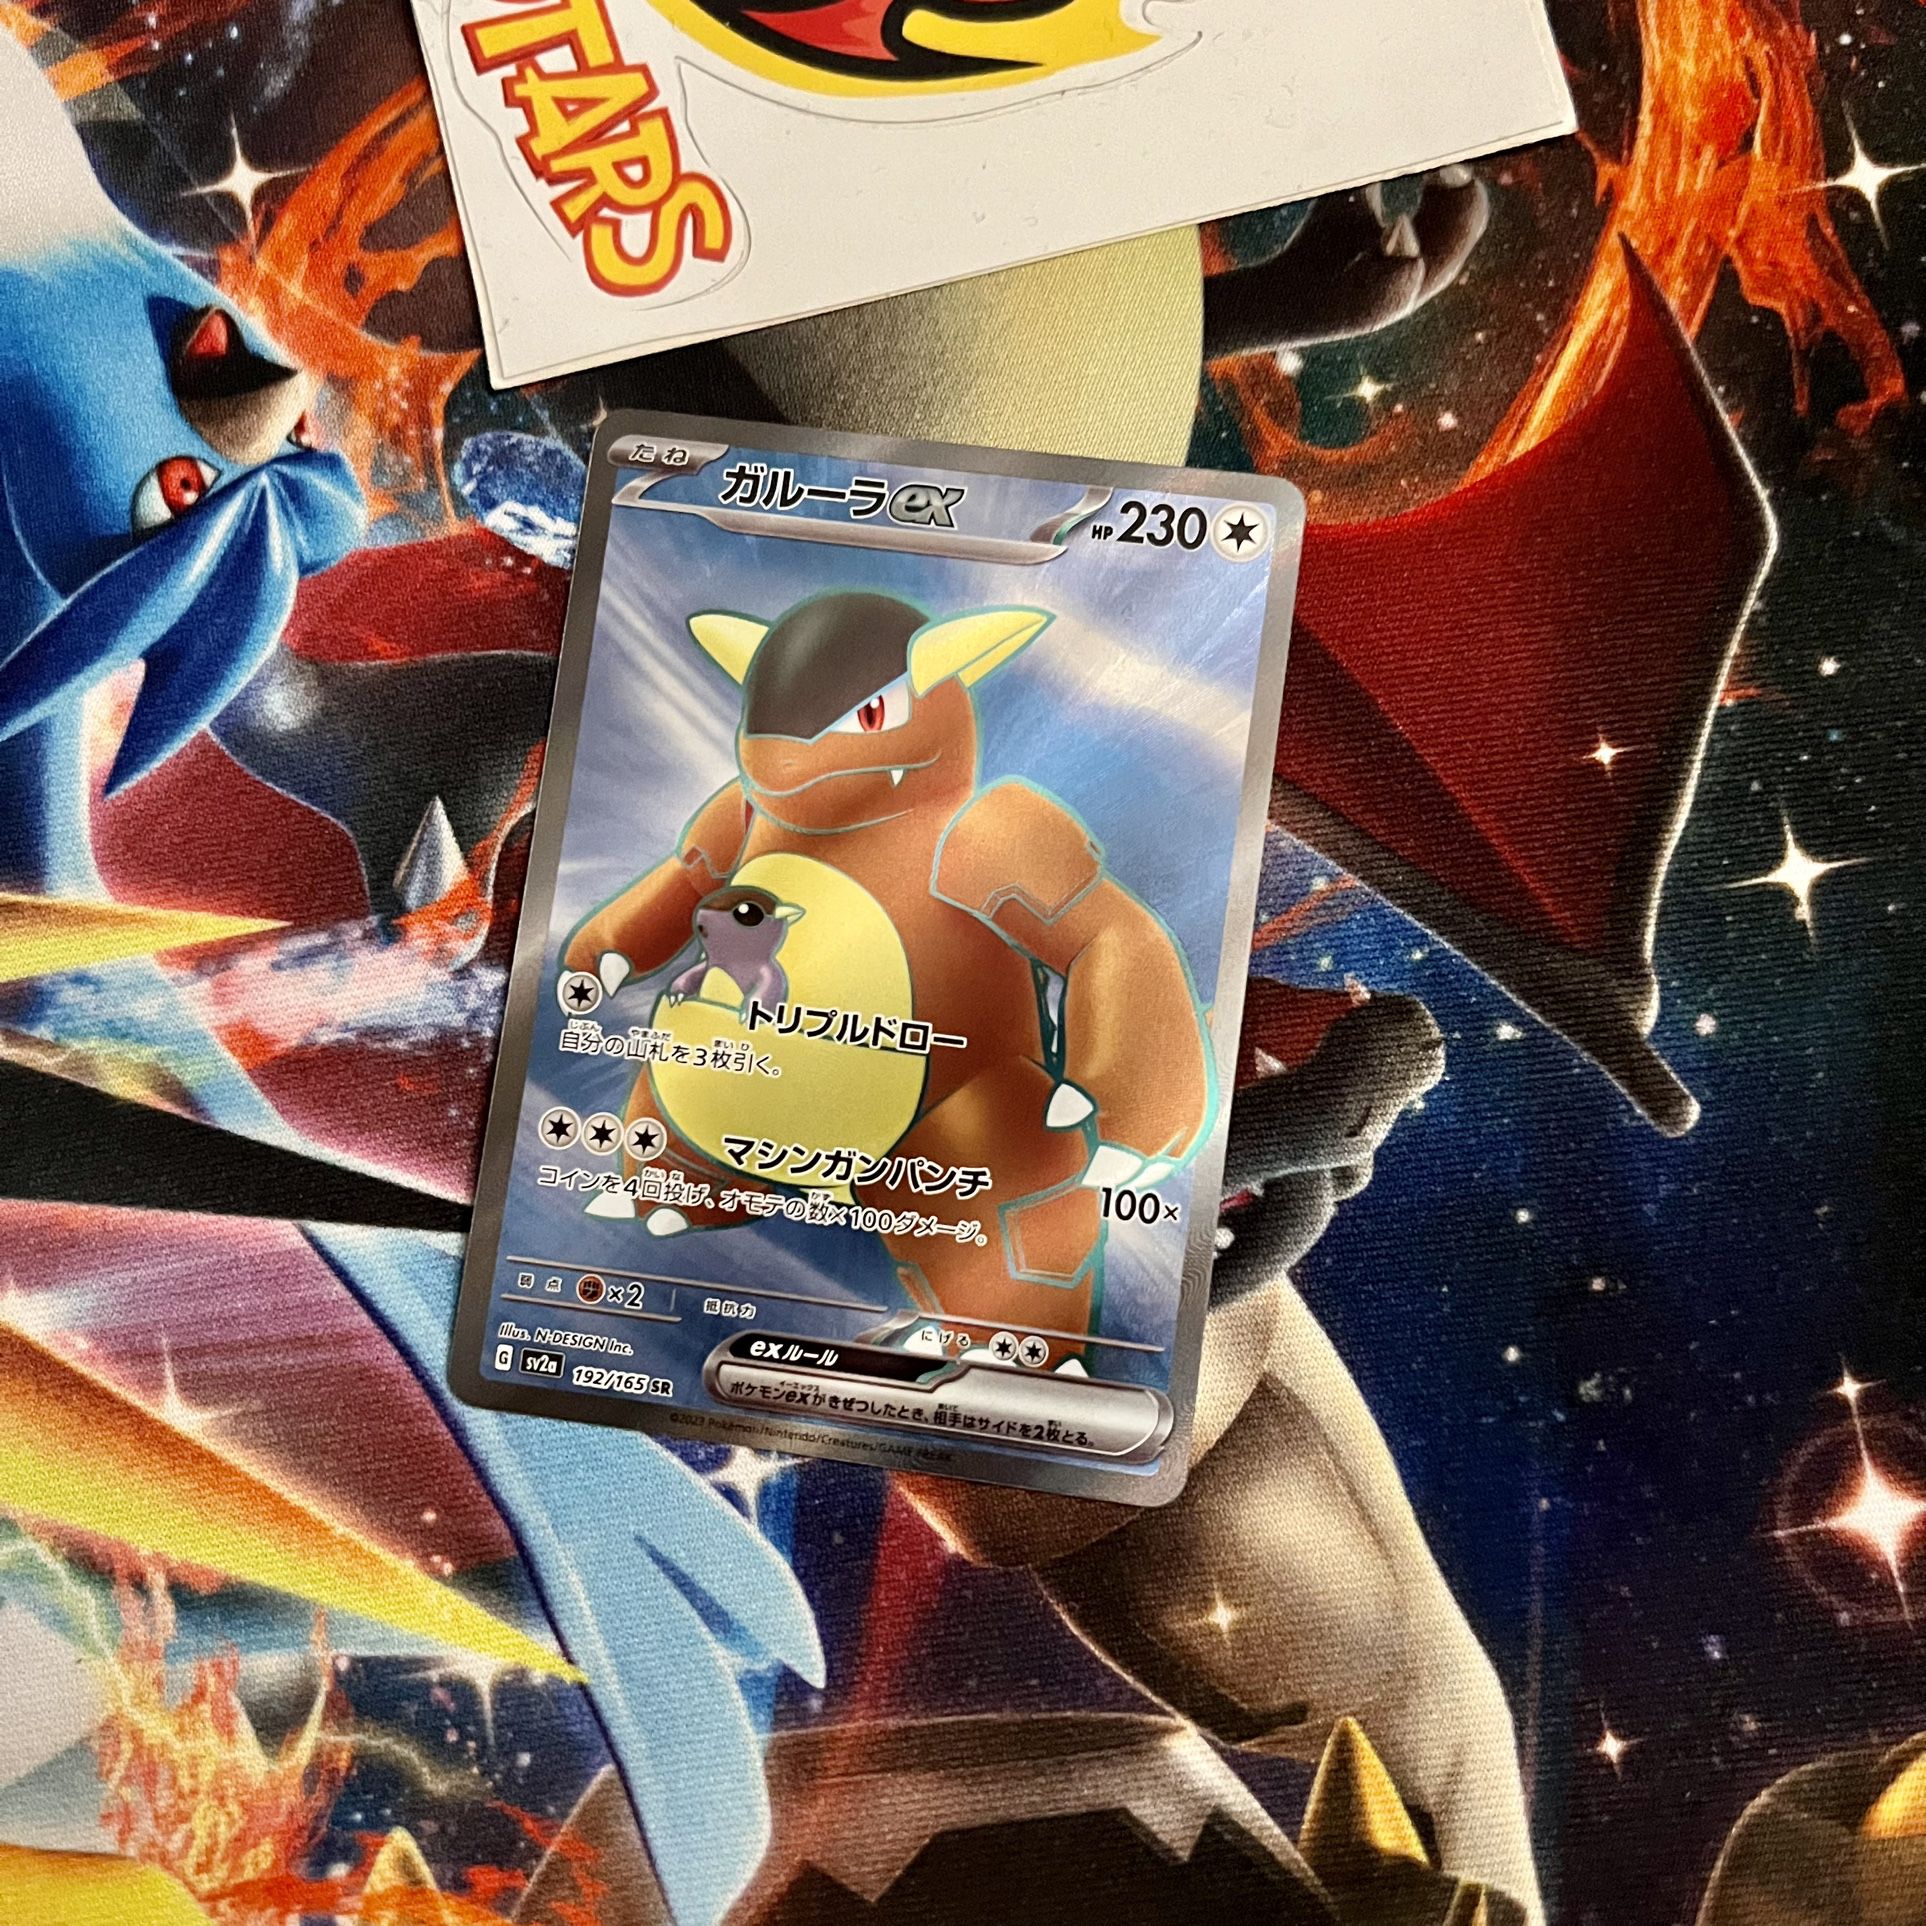 Kangaskhan EX - Sv2a - Pokémon Card 151 192/165